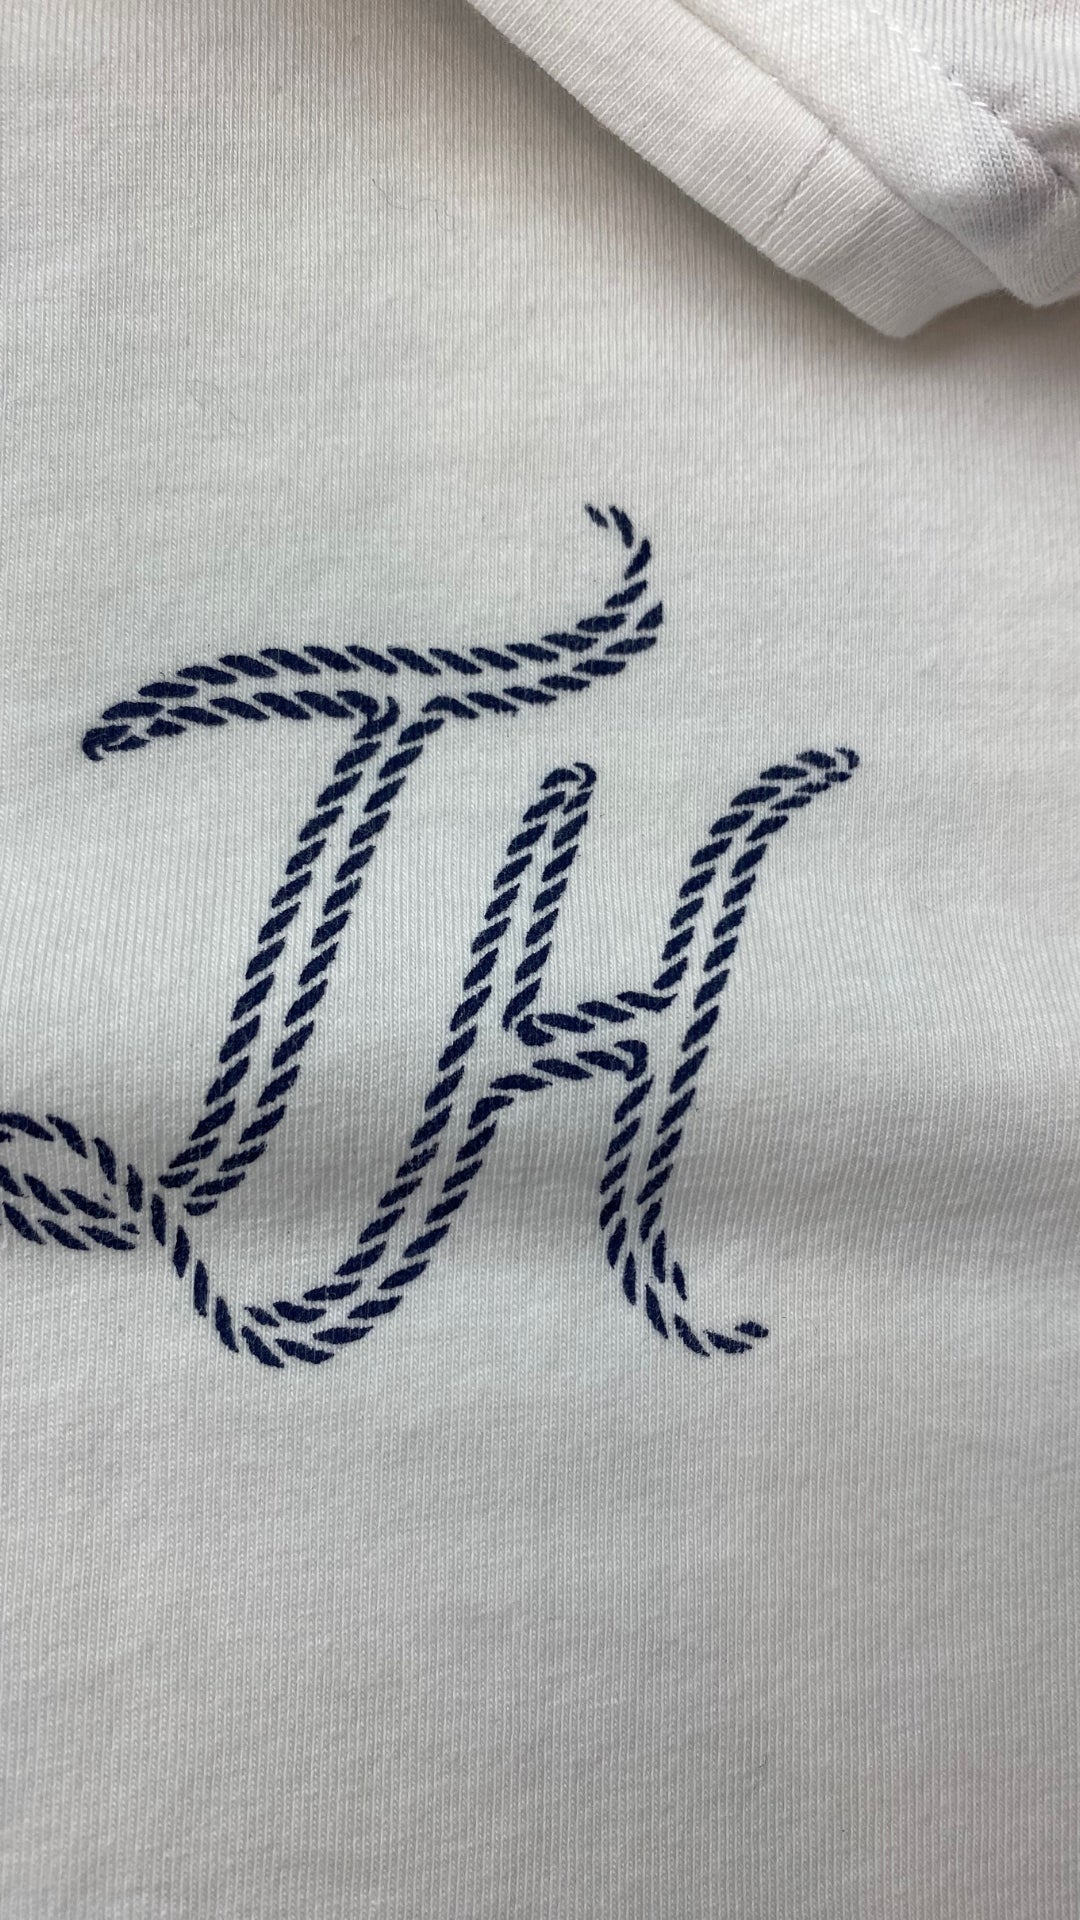 Chandail blanc ourlet à rayures Tommy Hilfiger, taille xxl. Vue du logo.